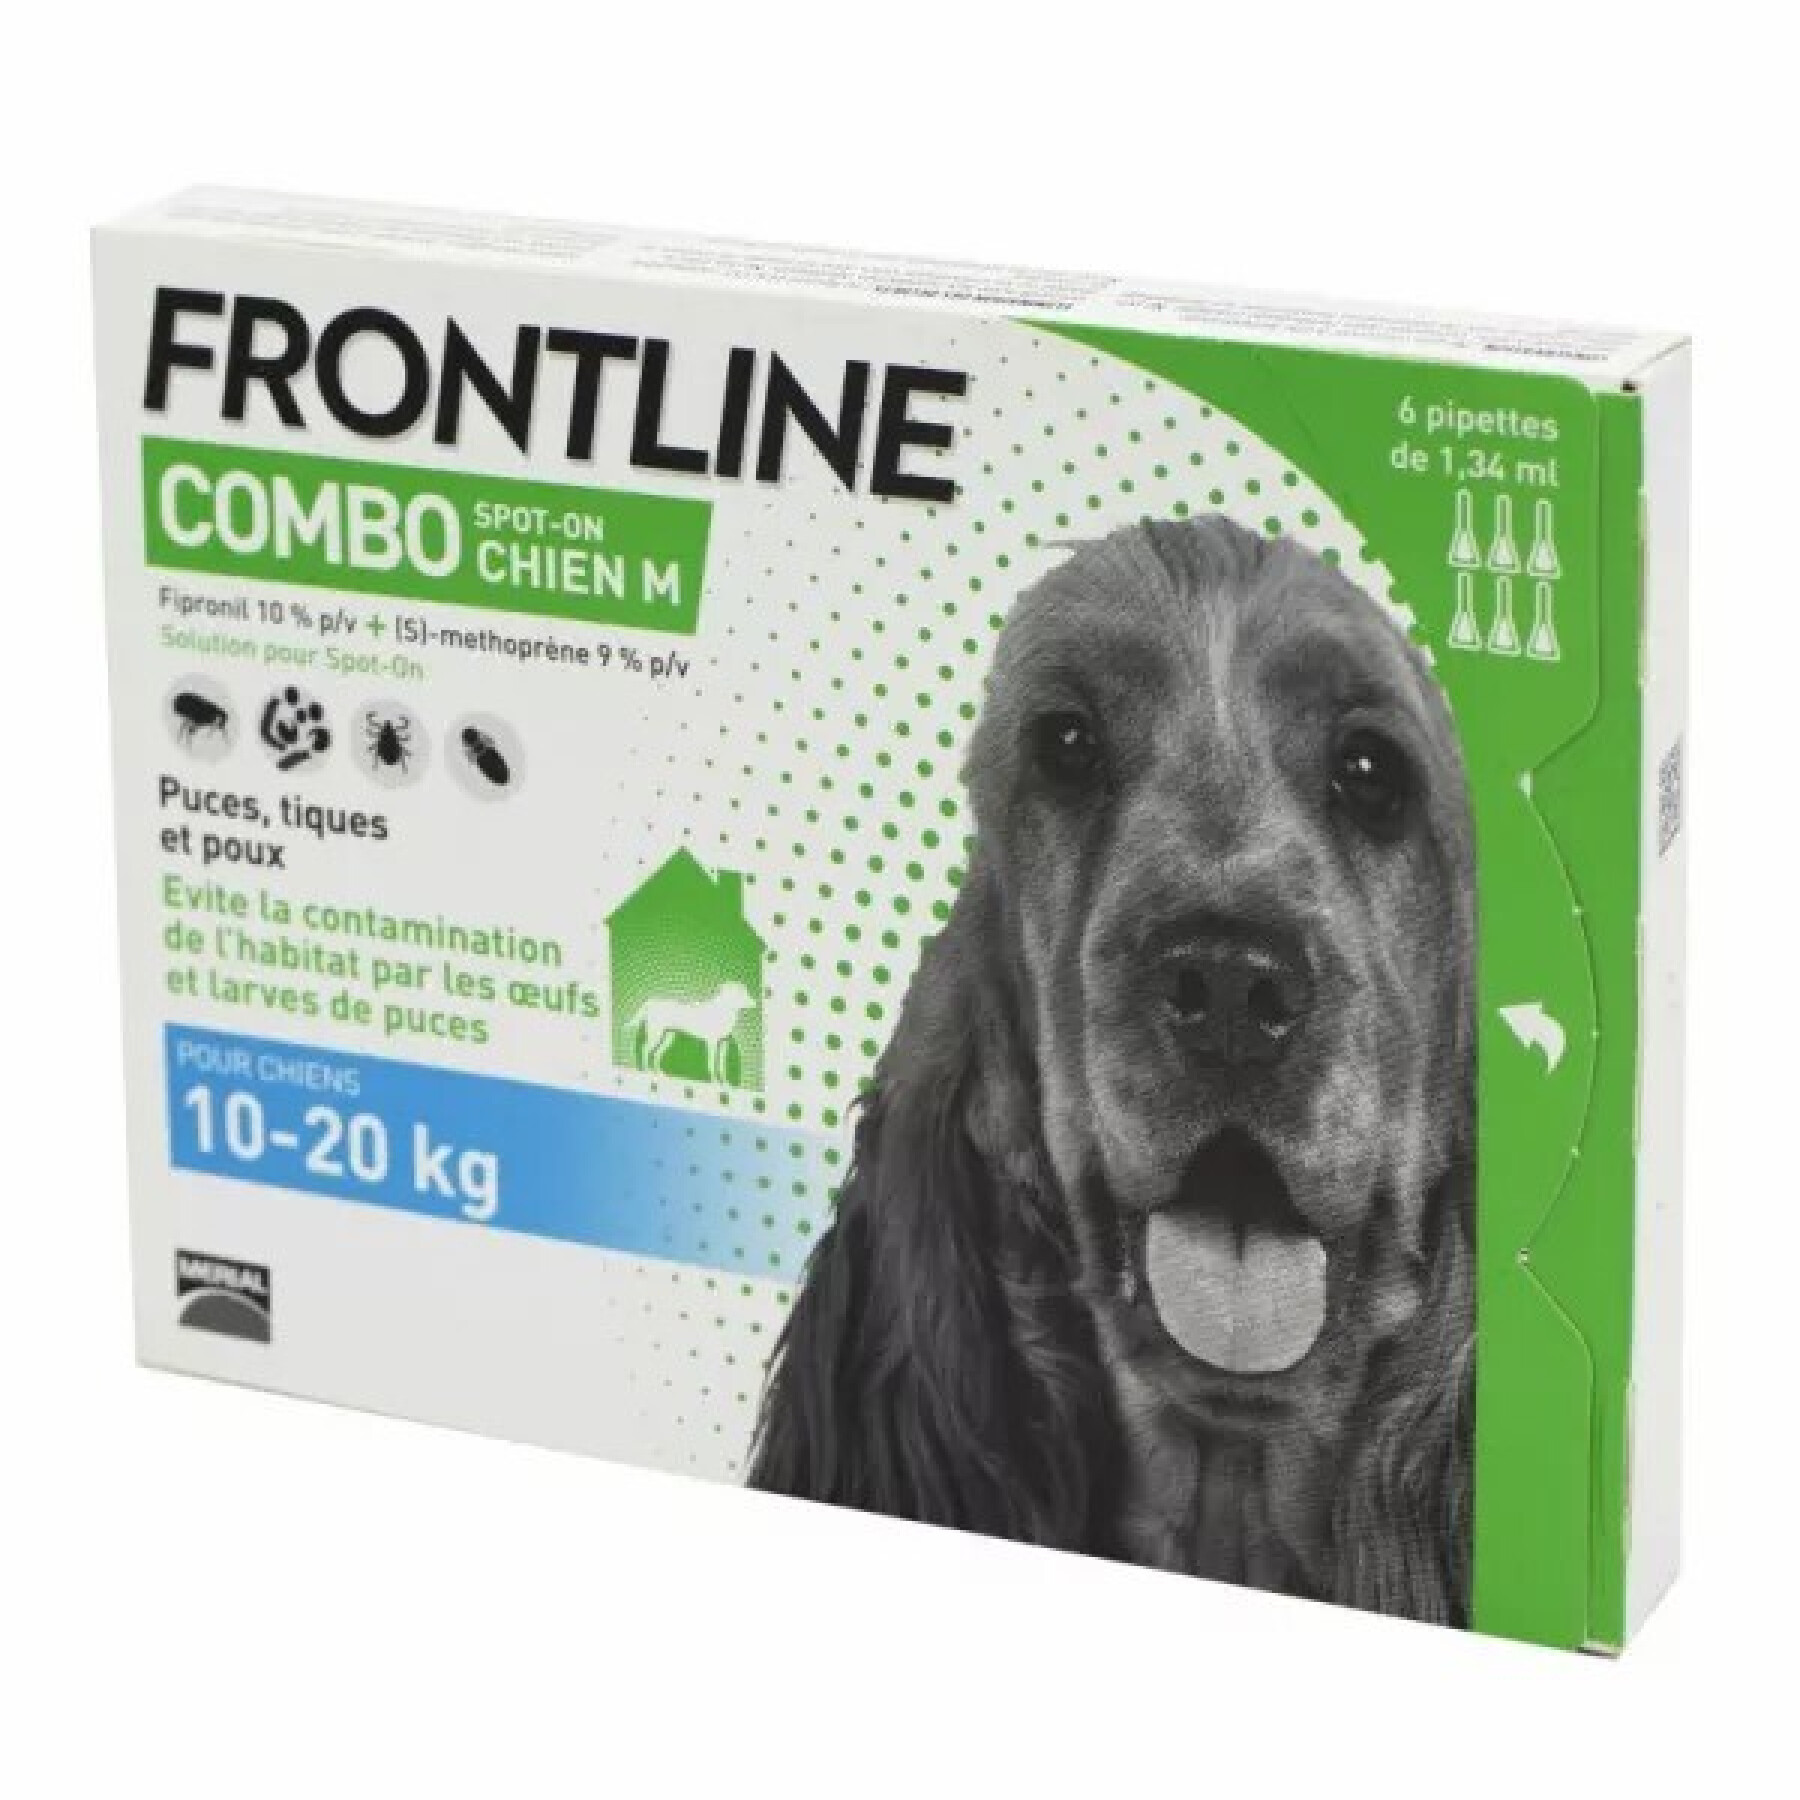 Pest control for dogs Frontline de 10/20 kg Combo Spot On (x6)